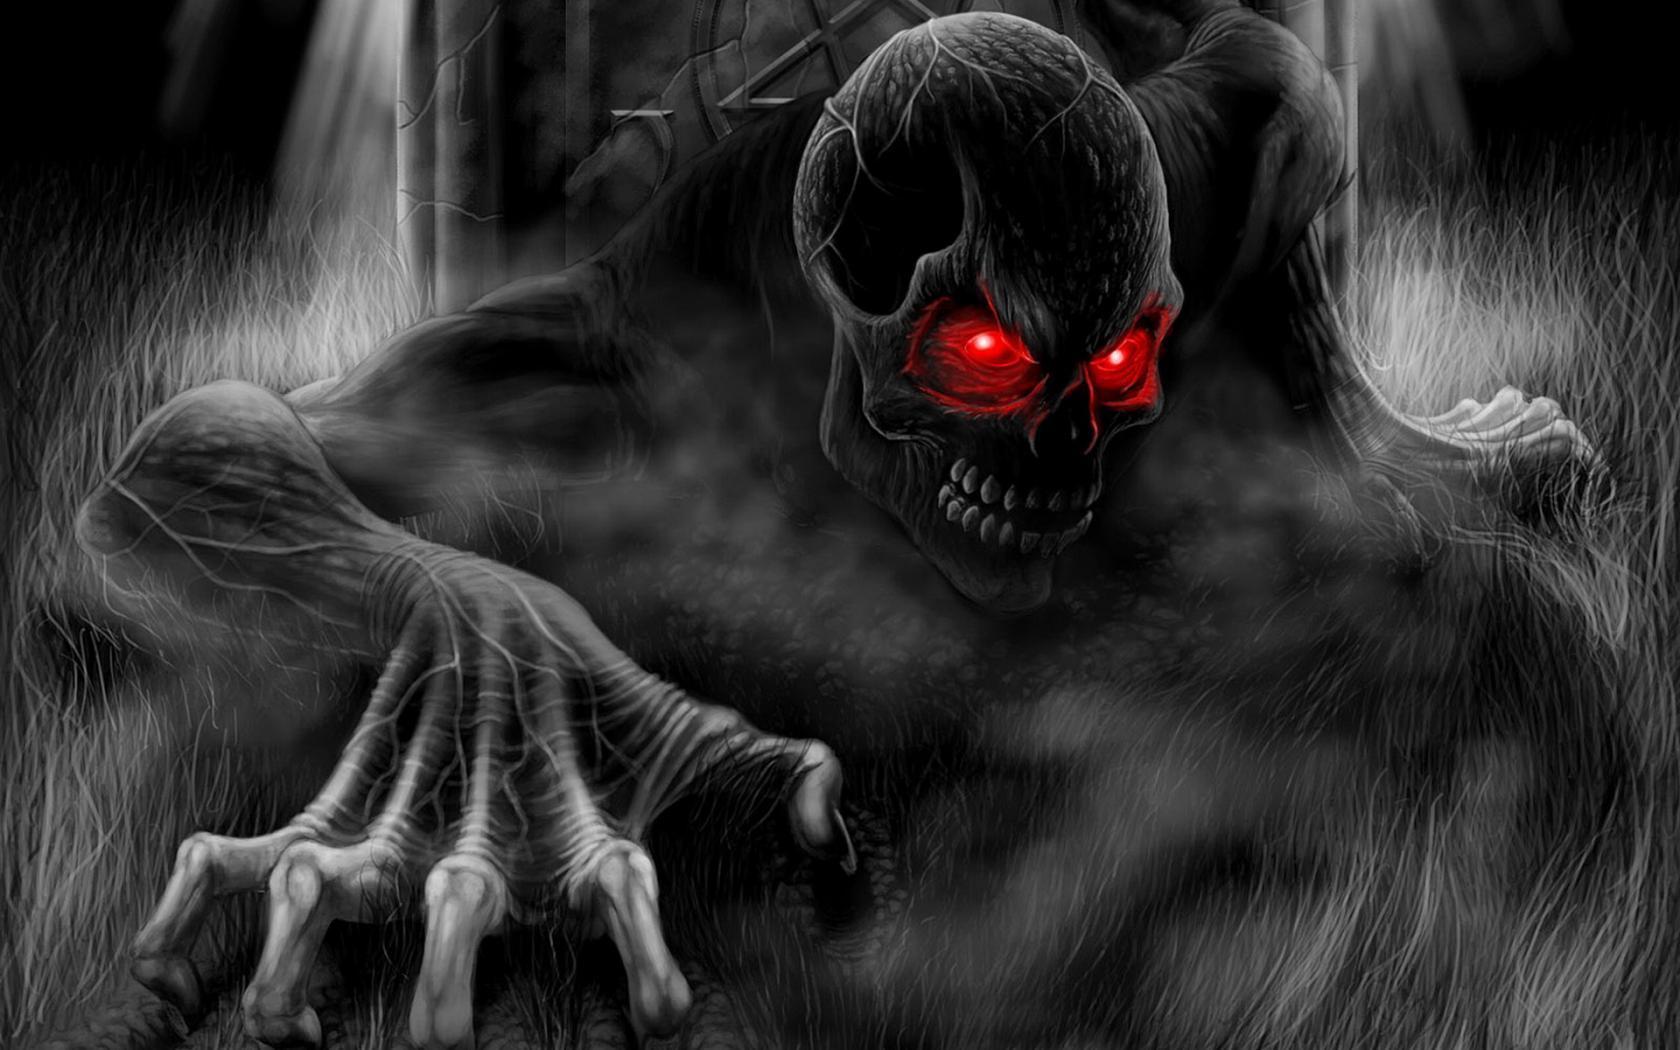 image For > Evil Skull Image